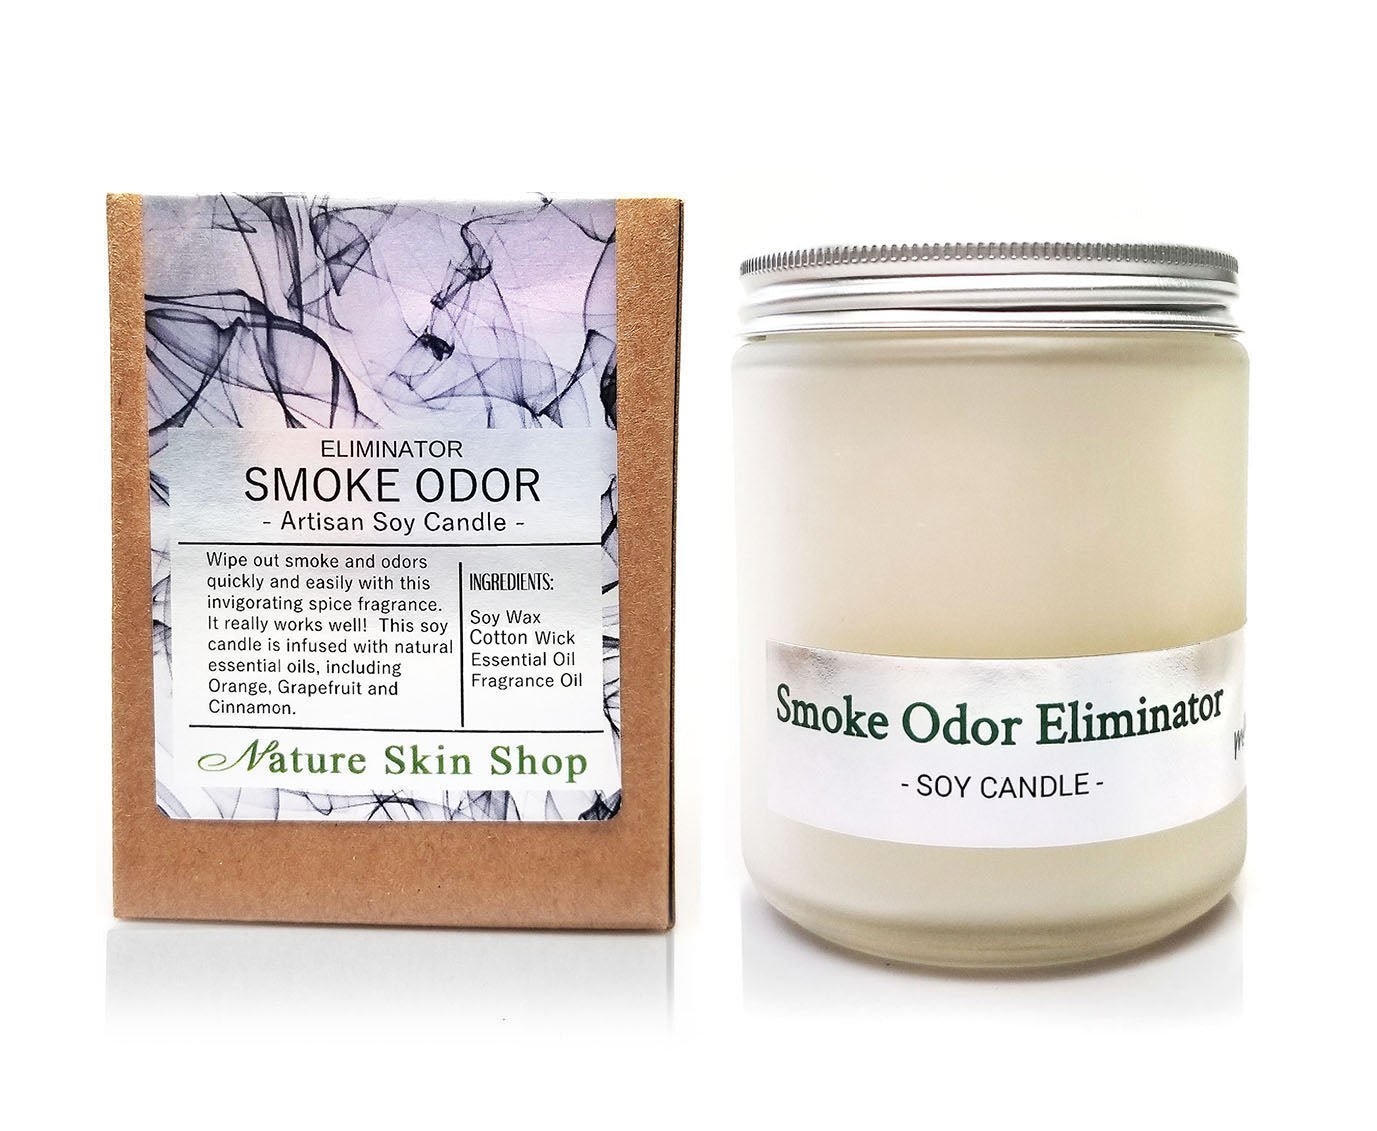 Smoke and Odor Eliminator Artisan Soy Candle - Nature Skin Shop